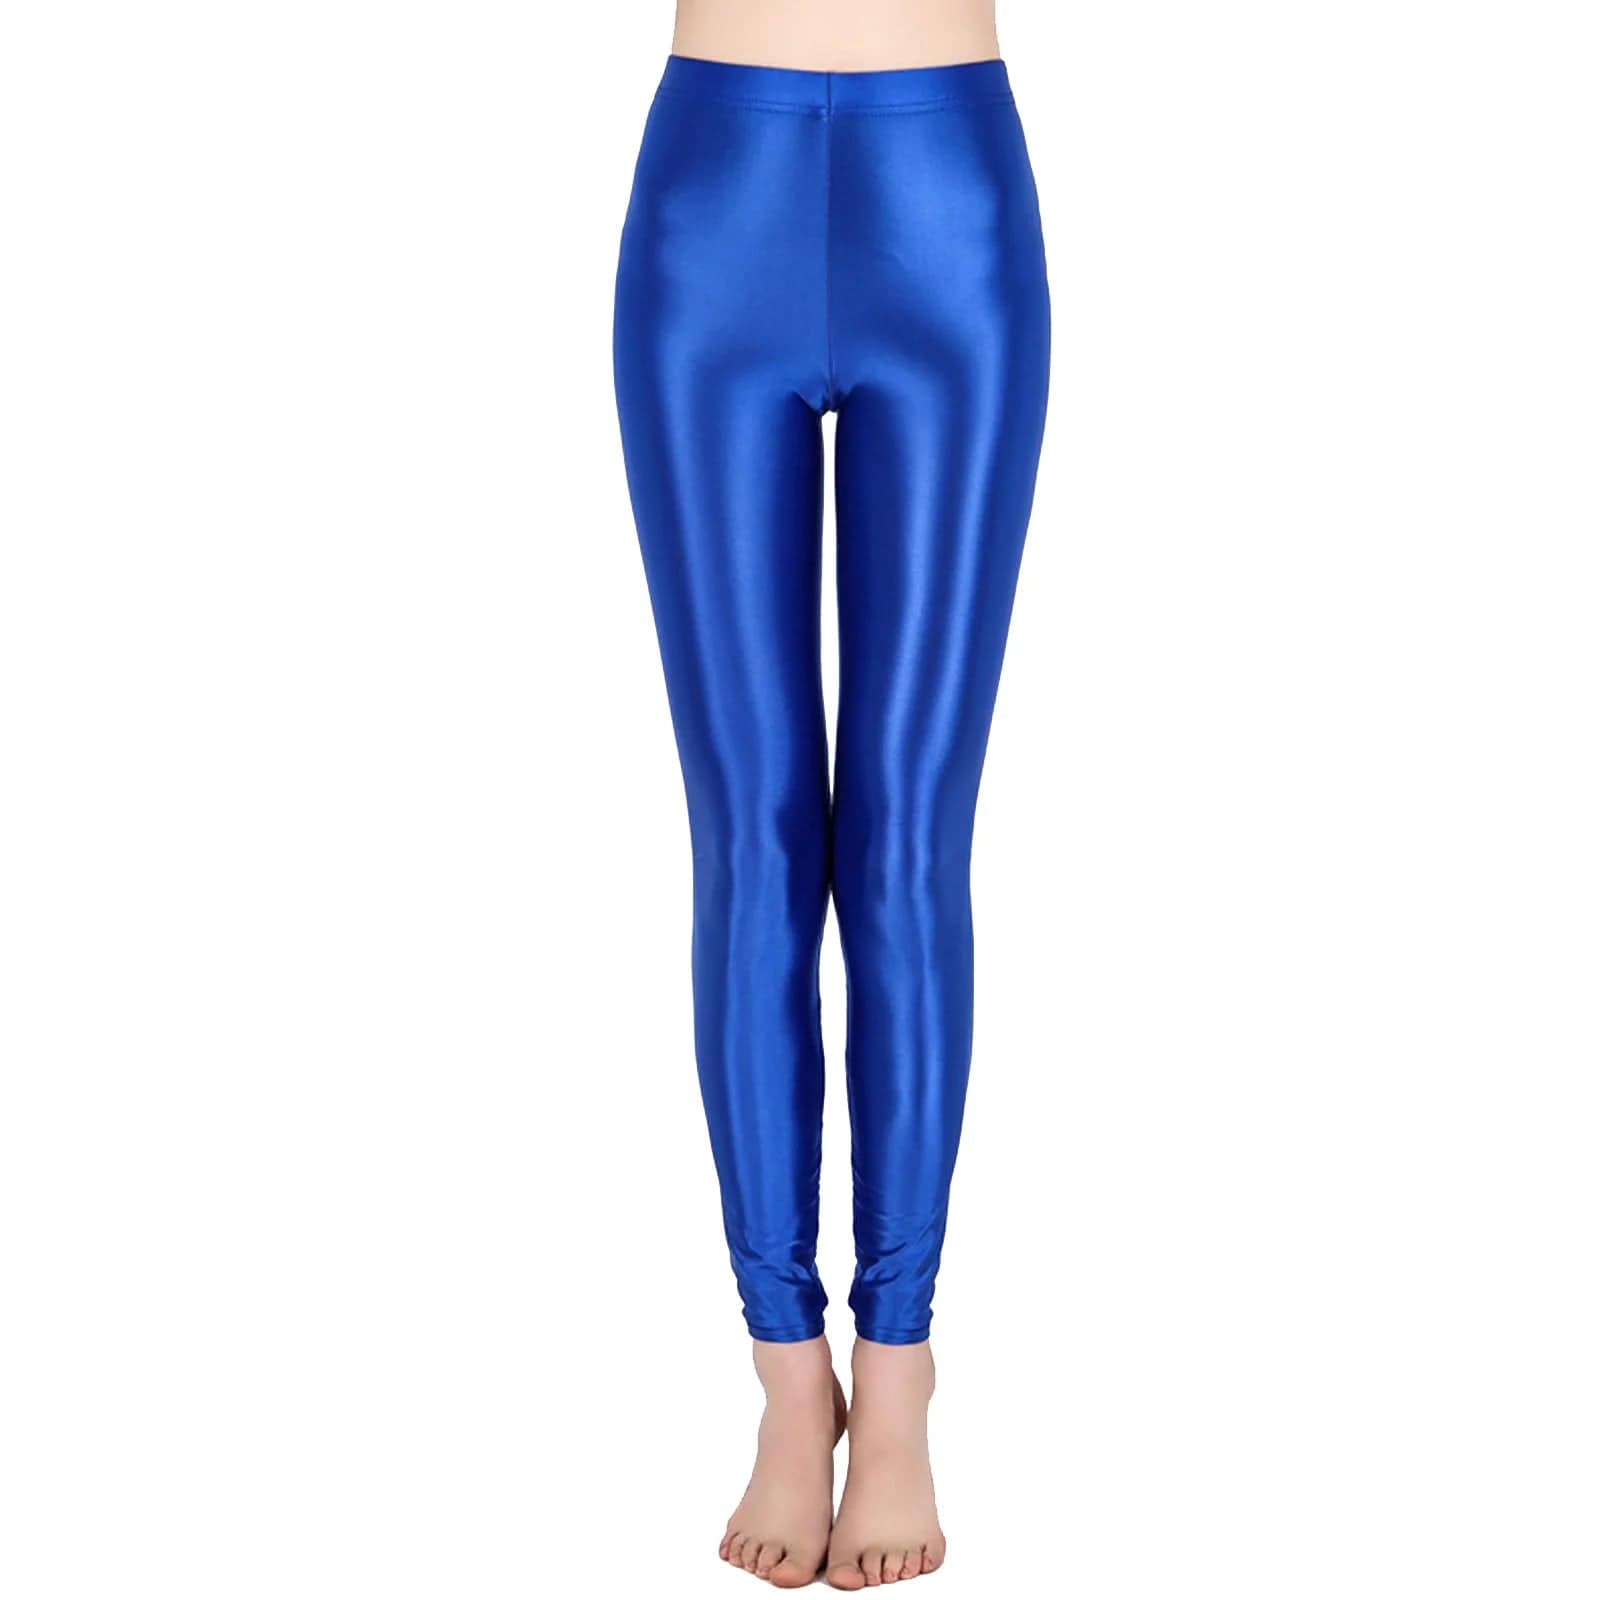 Kinky Cloth Royal Blue B / M Glossy Elastic Leggings Pants